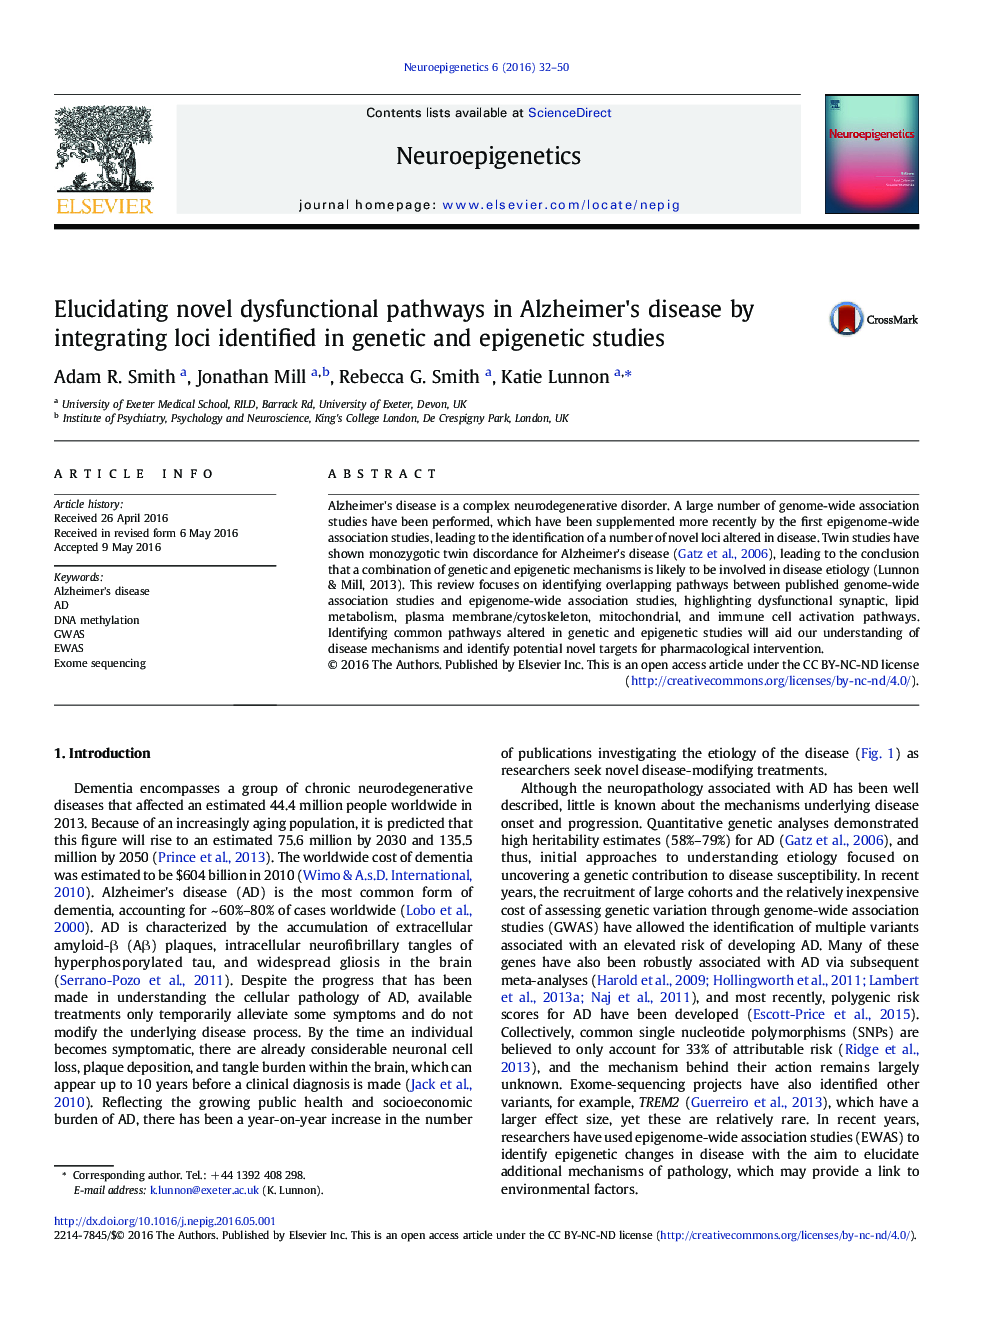 Elucidating novel dysfunctional pathways in Alzheimer's disease by integrating loci identified in genetic and epigenetic studies